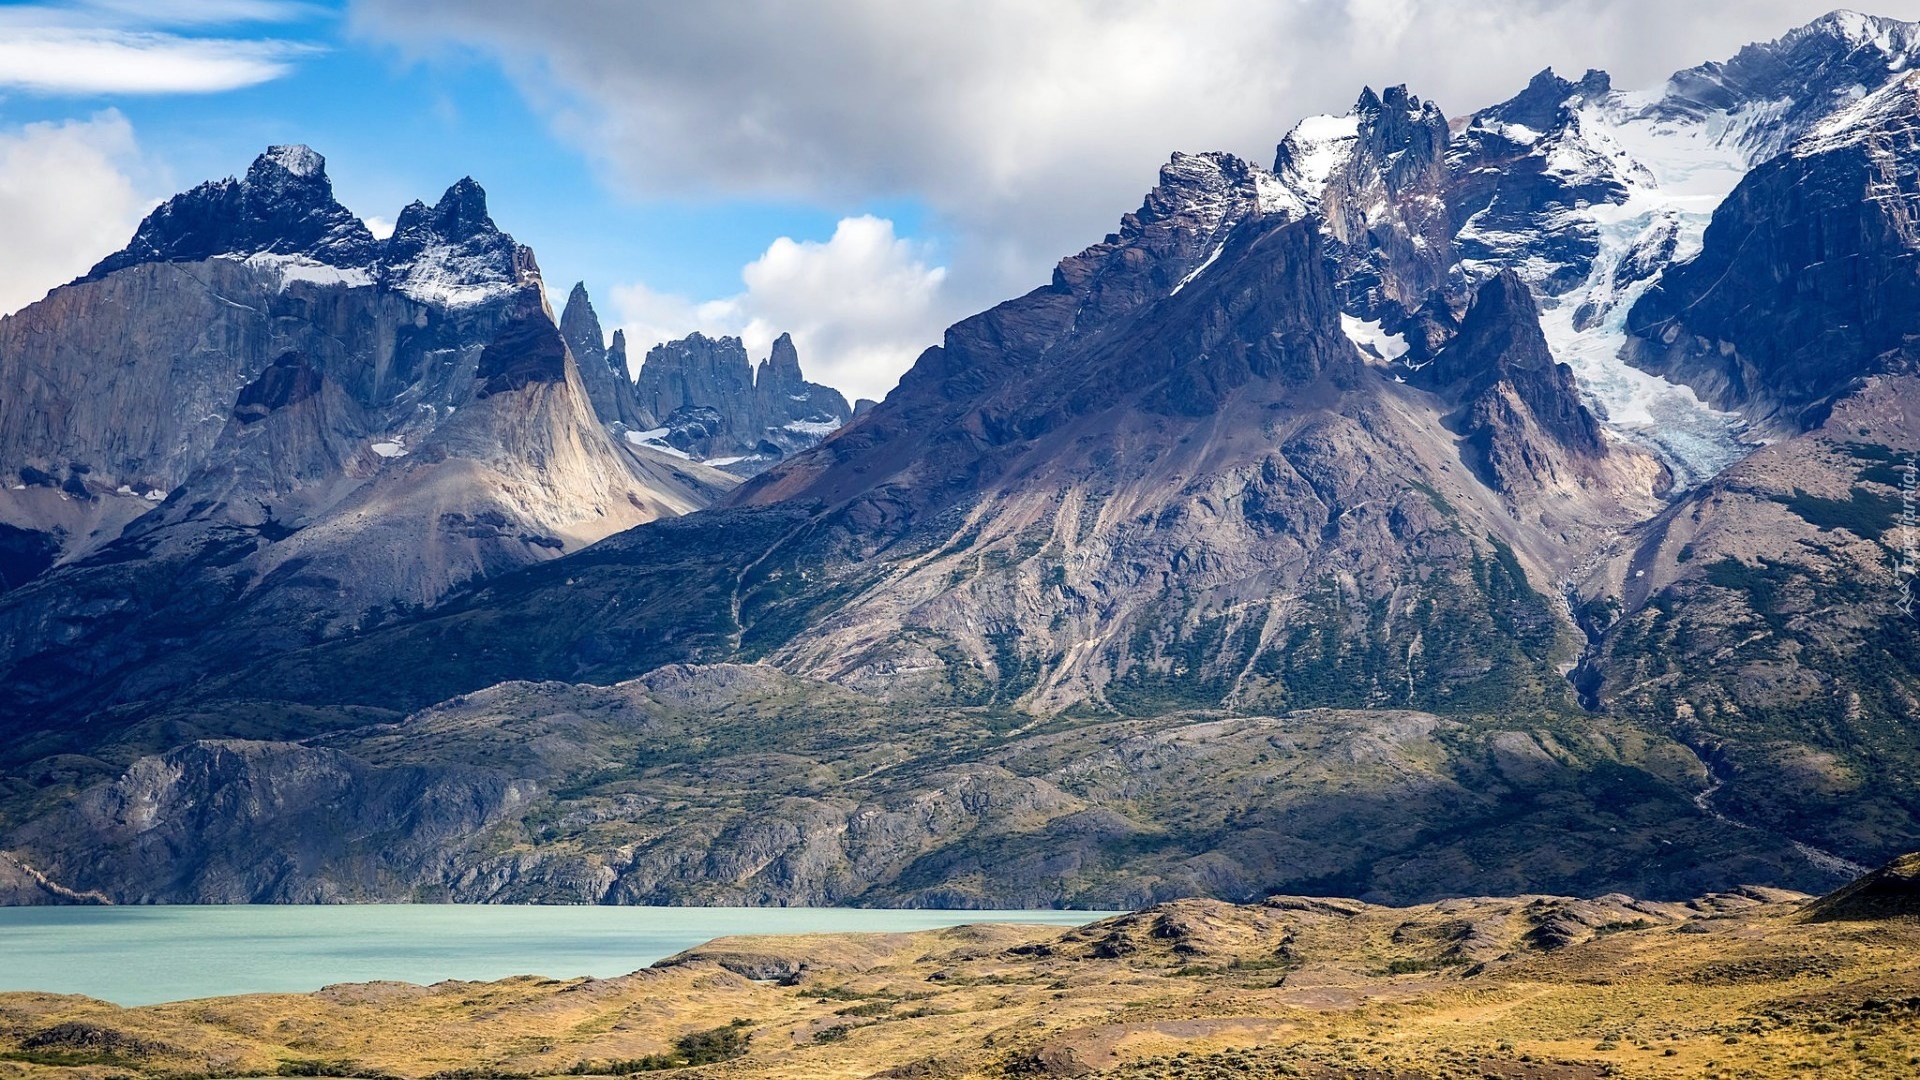 Góry Cordillera del Paine, Park Narodowy Torres del Paine, Jezioro Pehoe, Patagonia, Chile